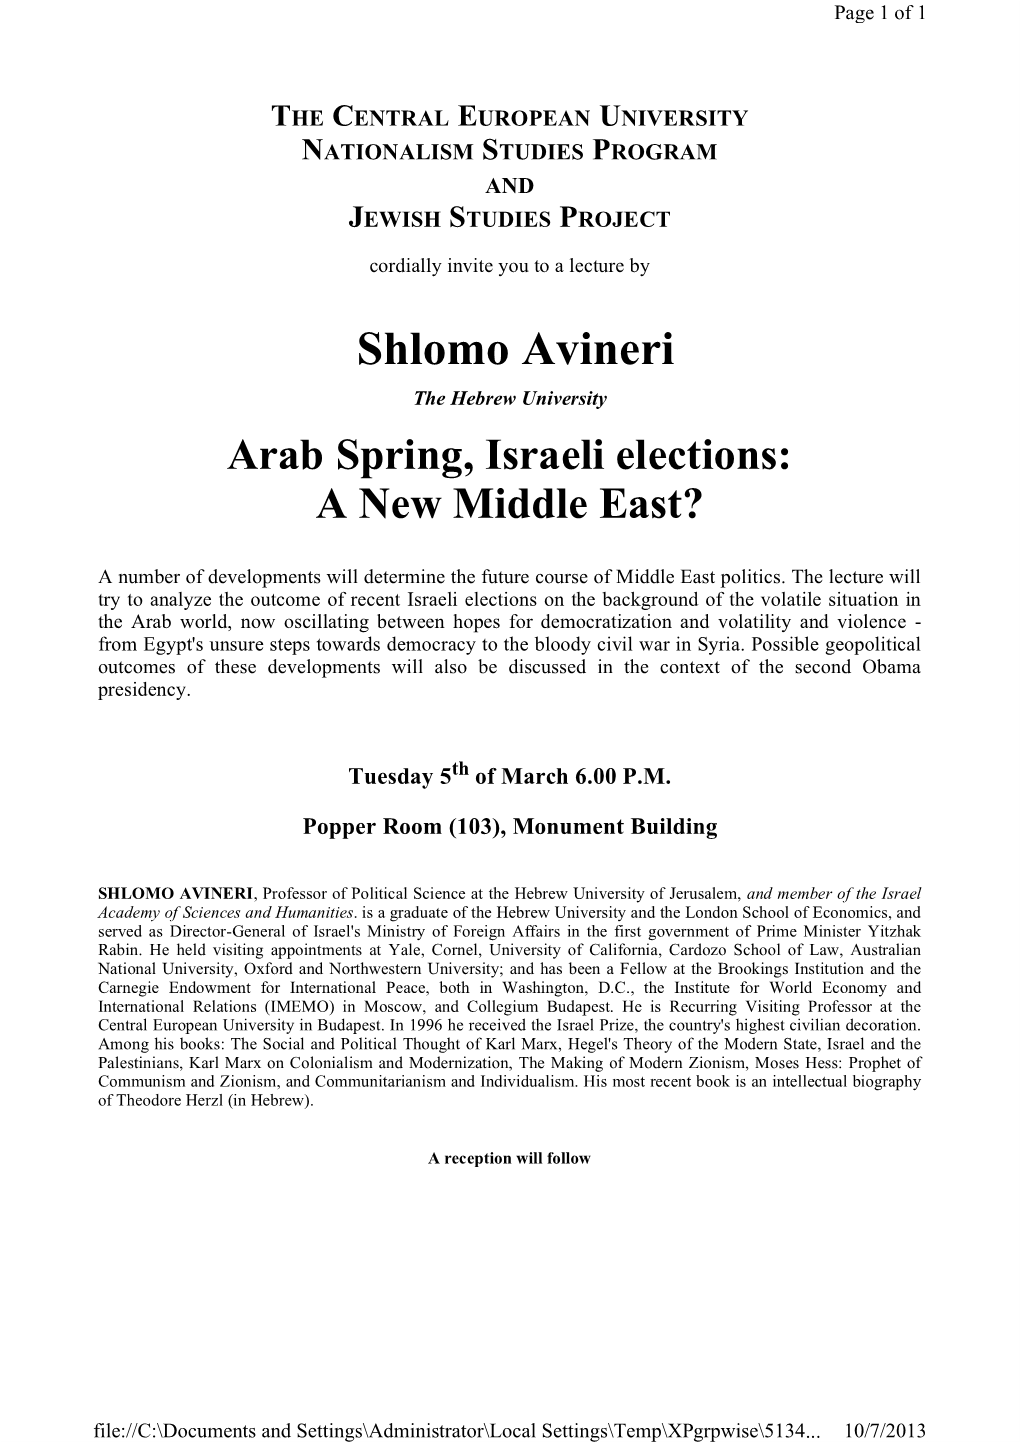 Shlomo Avineri the Hebrew University Arab Spring, Israeli Elections: a New Middle East?